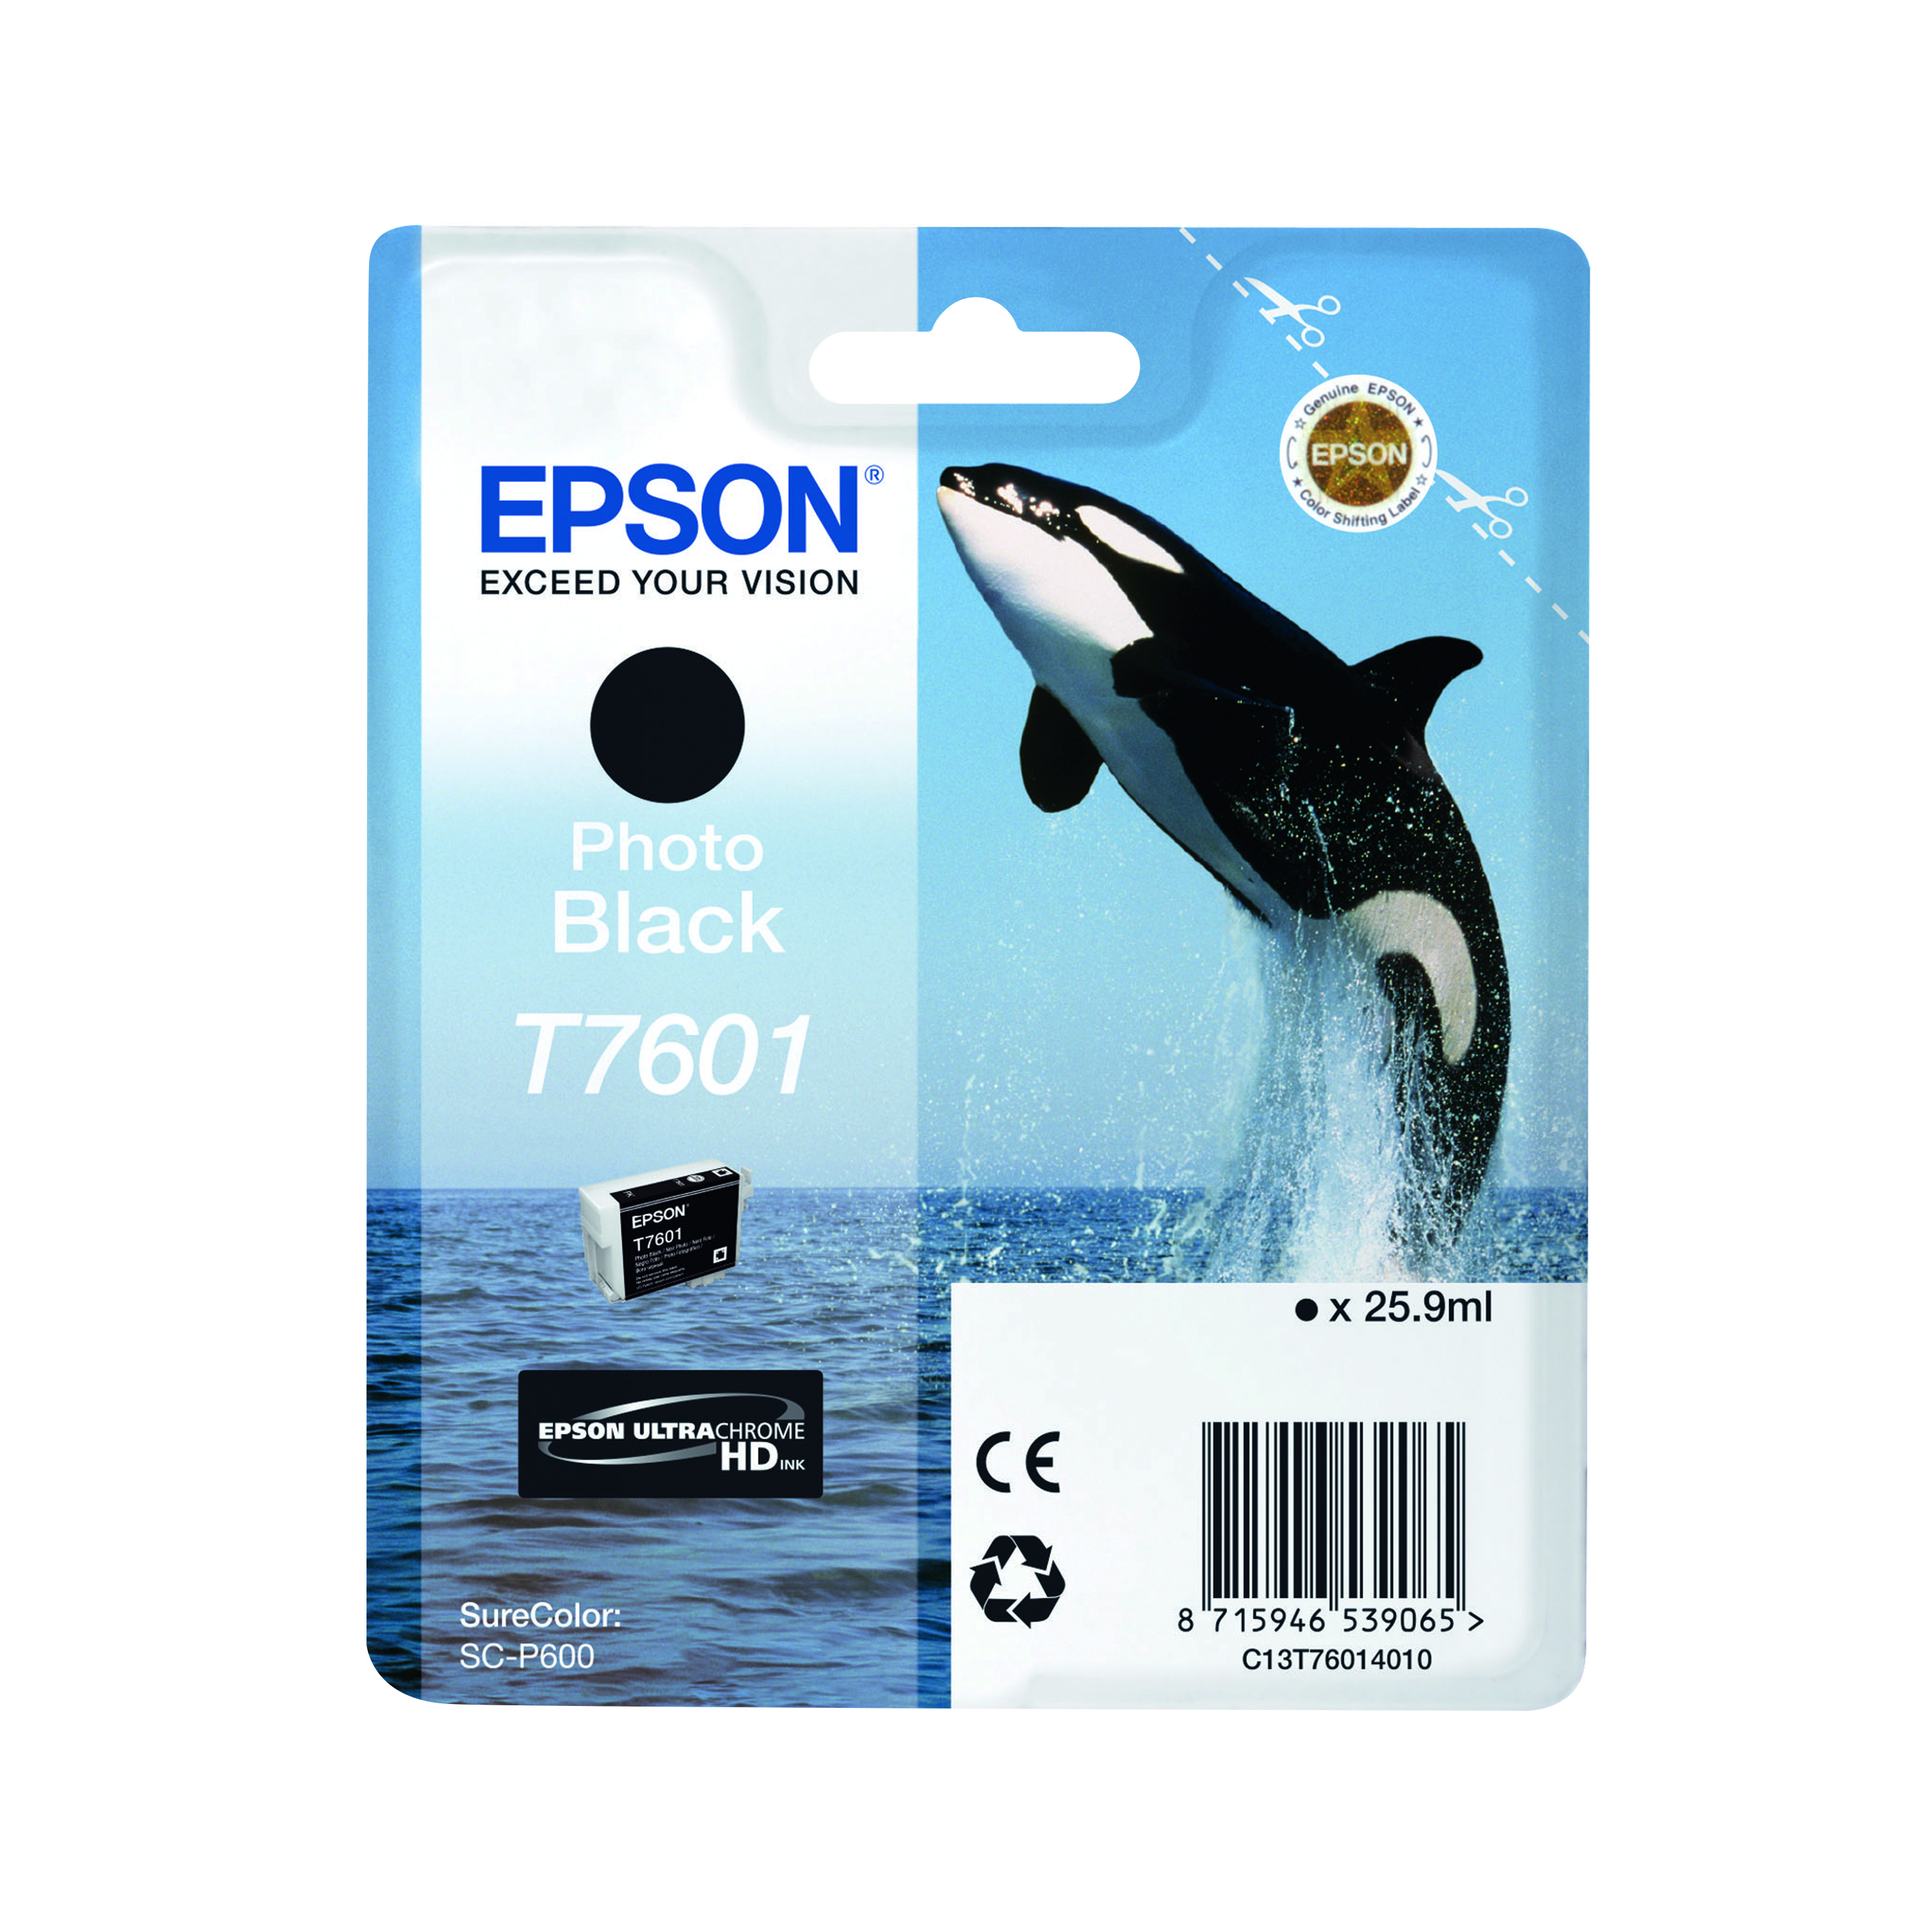 Epson T7601 Photo Ink Cartridge Killer Whale Black C13T76014010